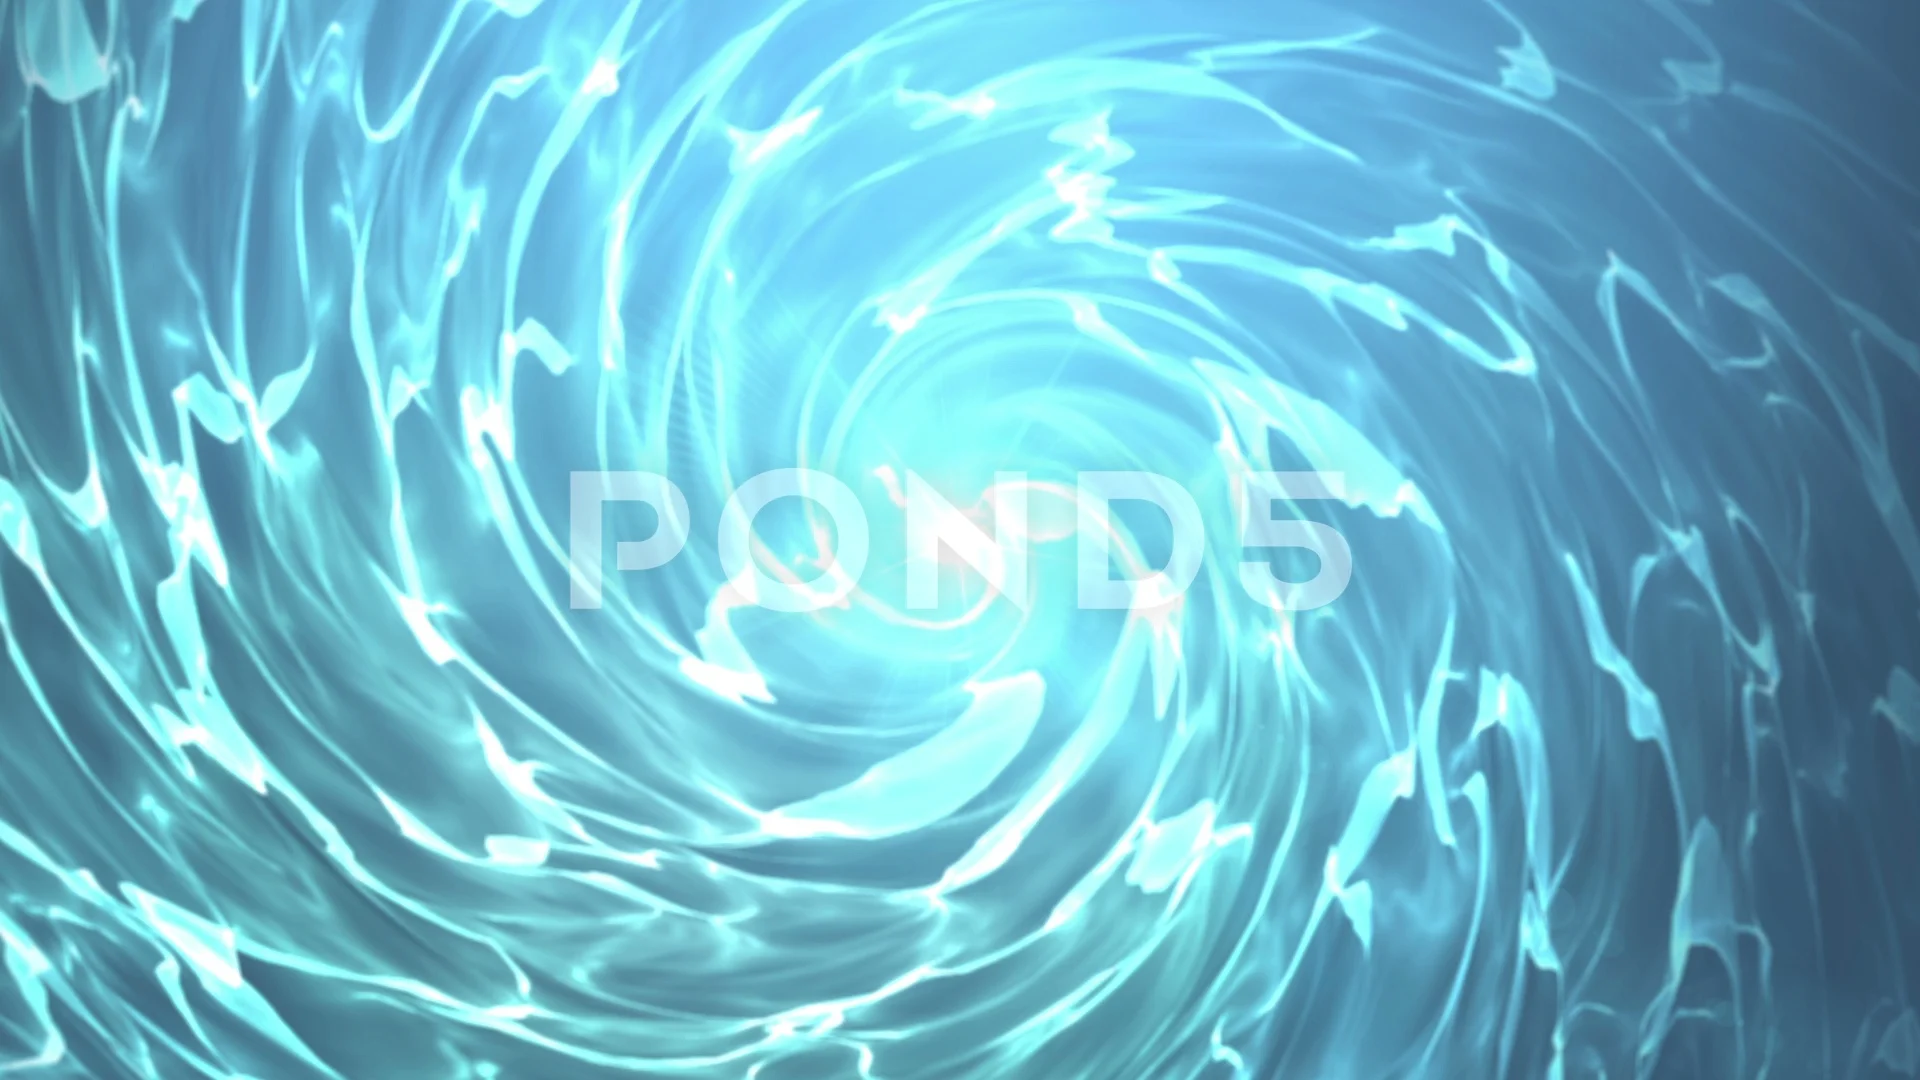 https://images.pond5.com/blue-water-swirl-background-abstract-091112204_prevstill.jpeg